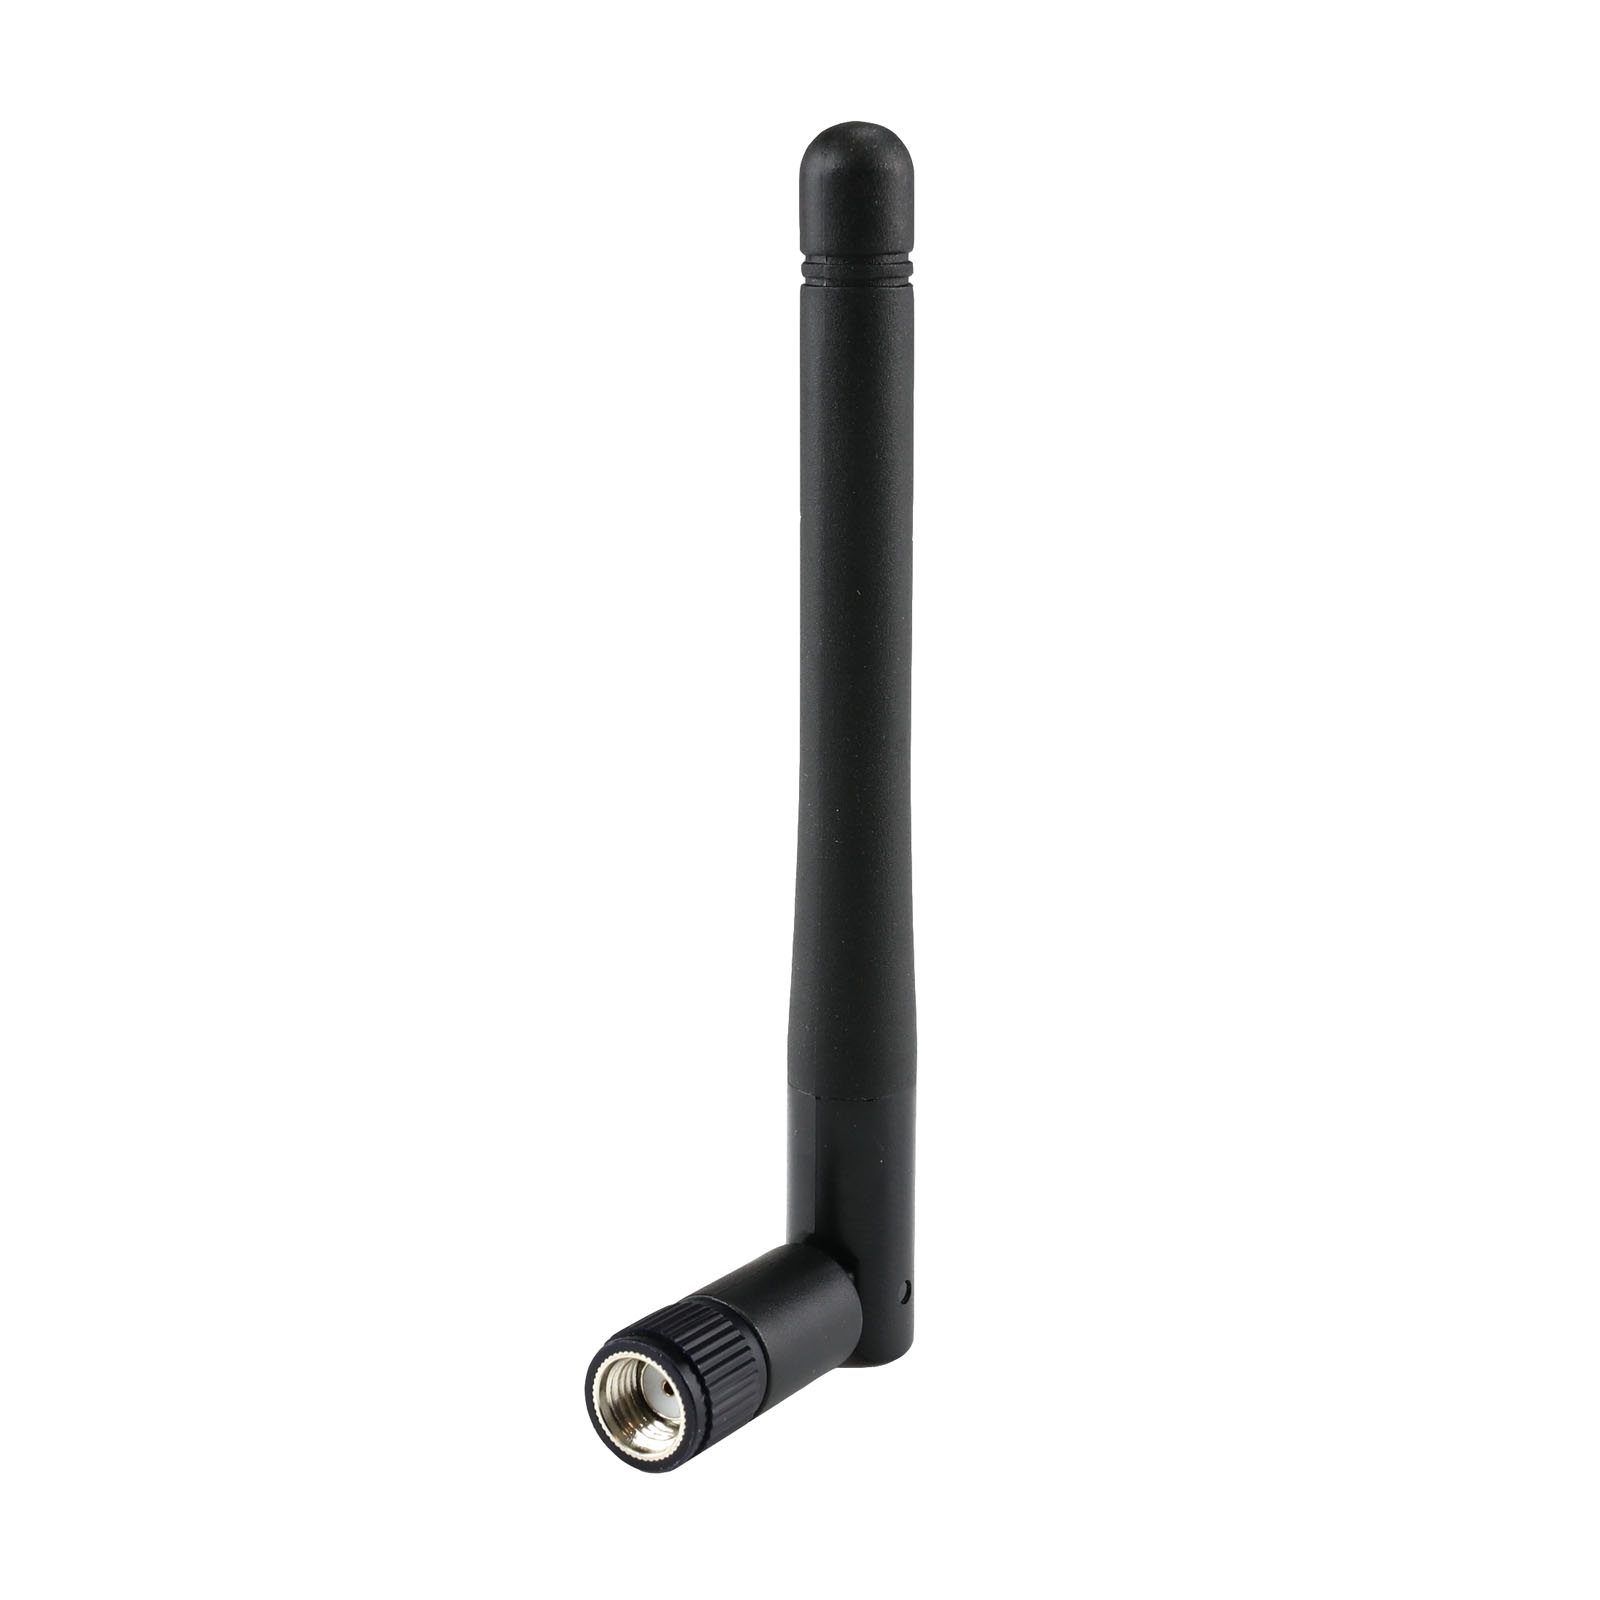 TVIP Wireless USB 2.0 Wlan Stick Adapter 600Mbit 2.4/5 GHz mit Antenne